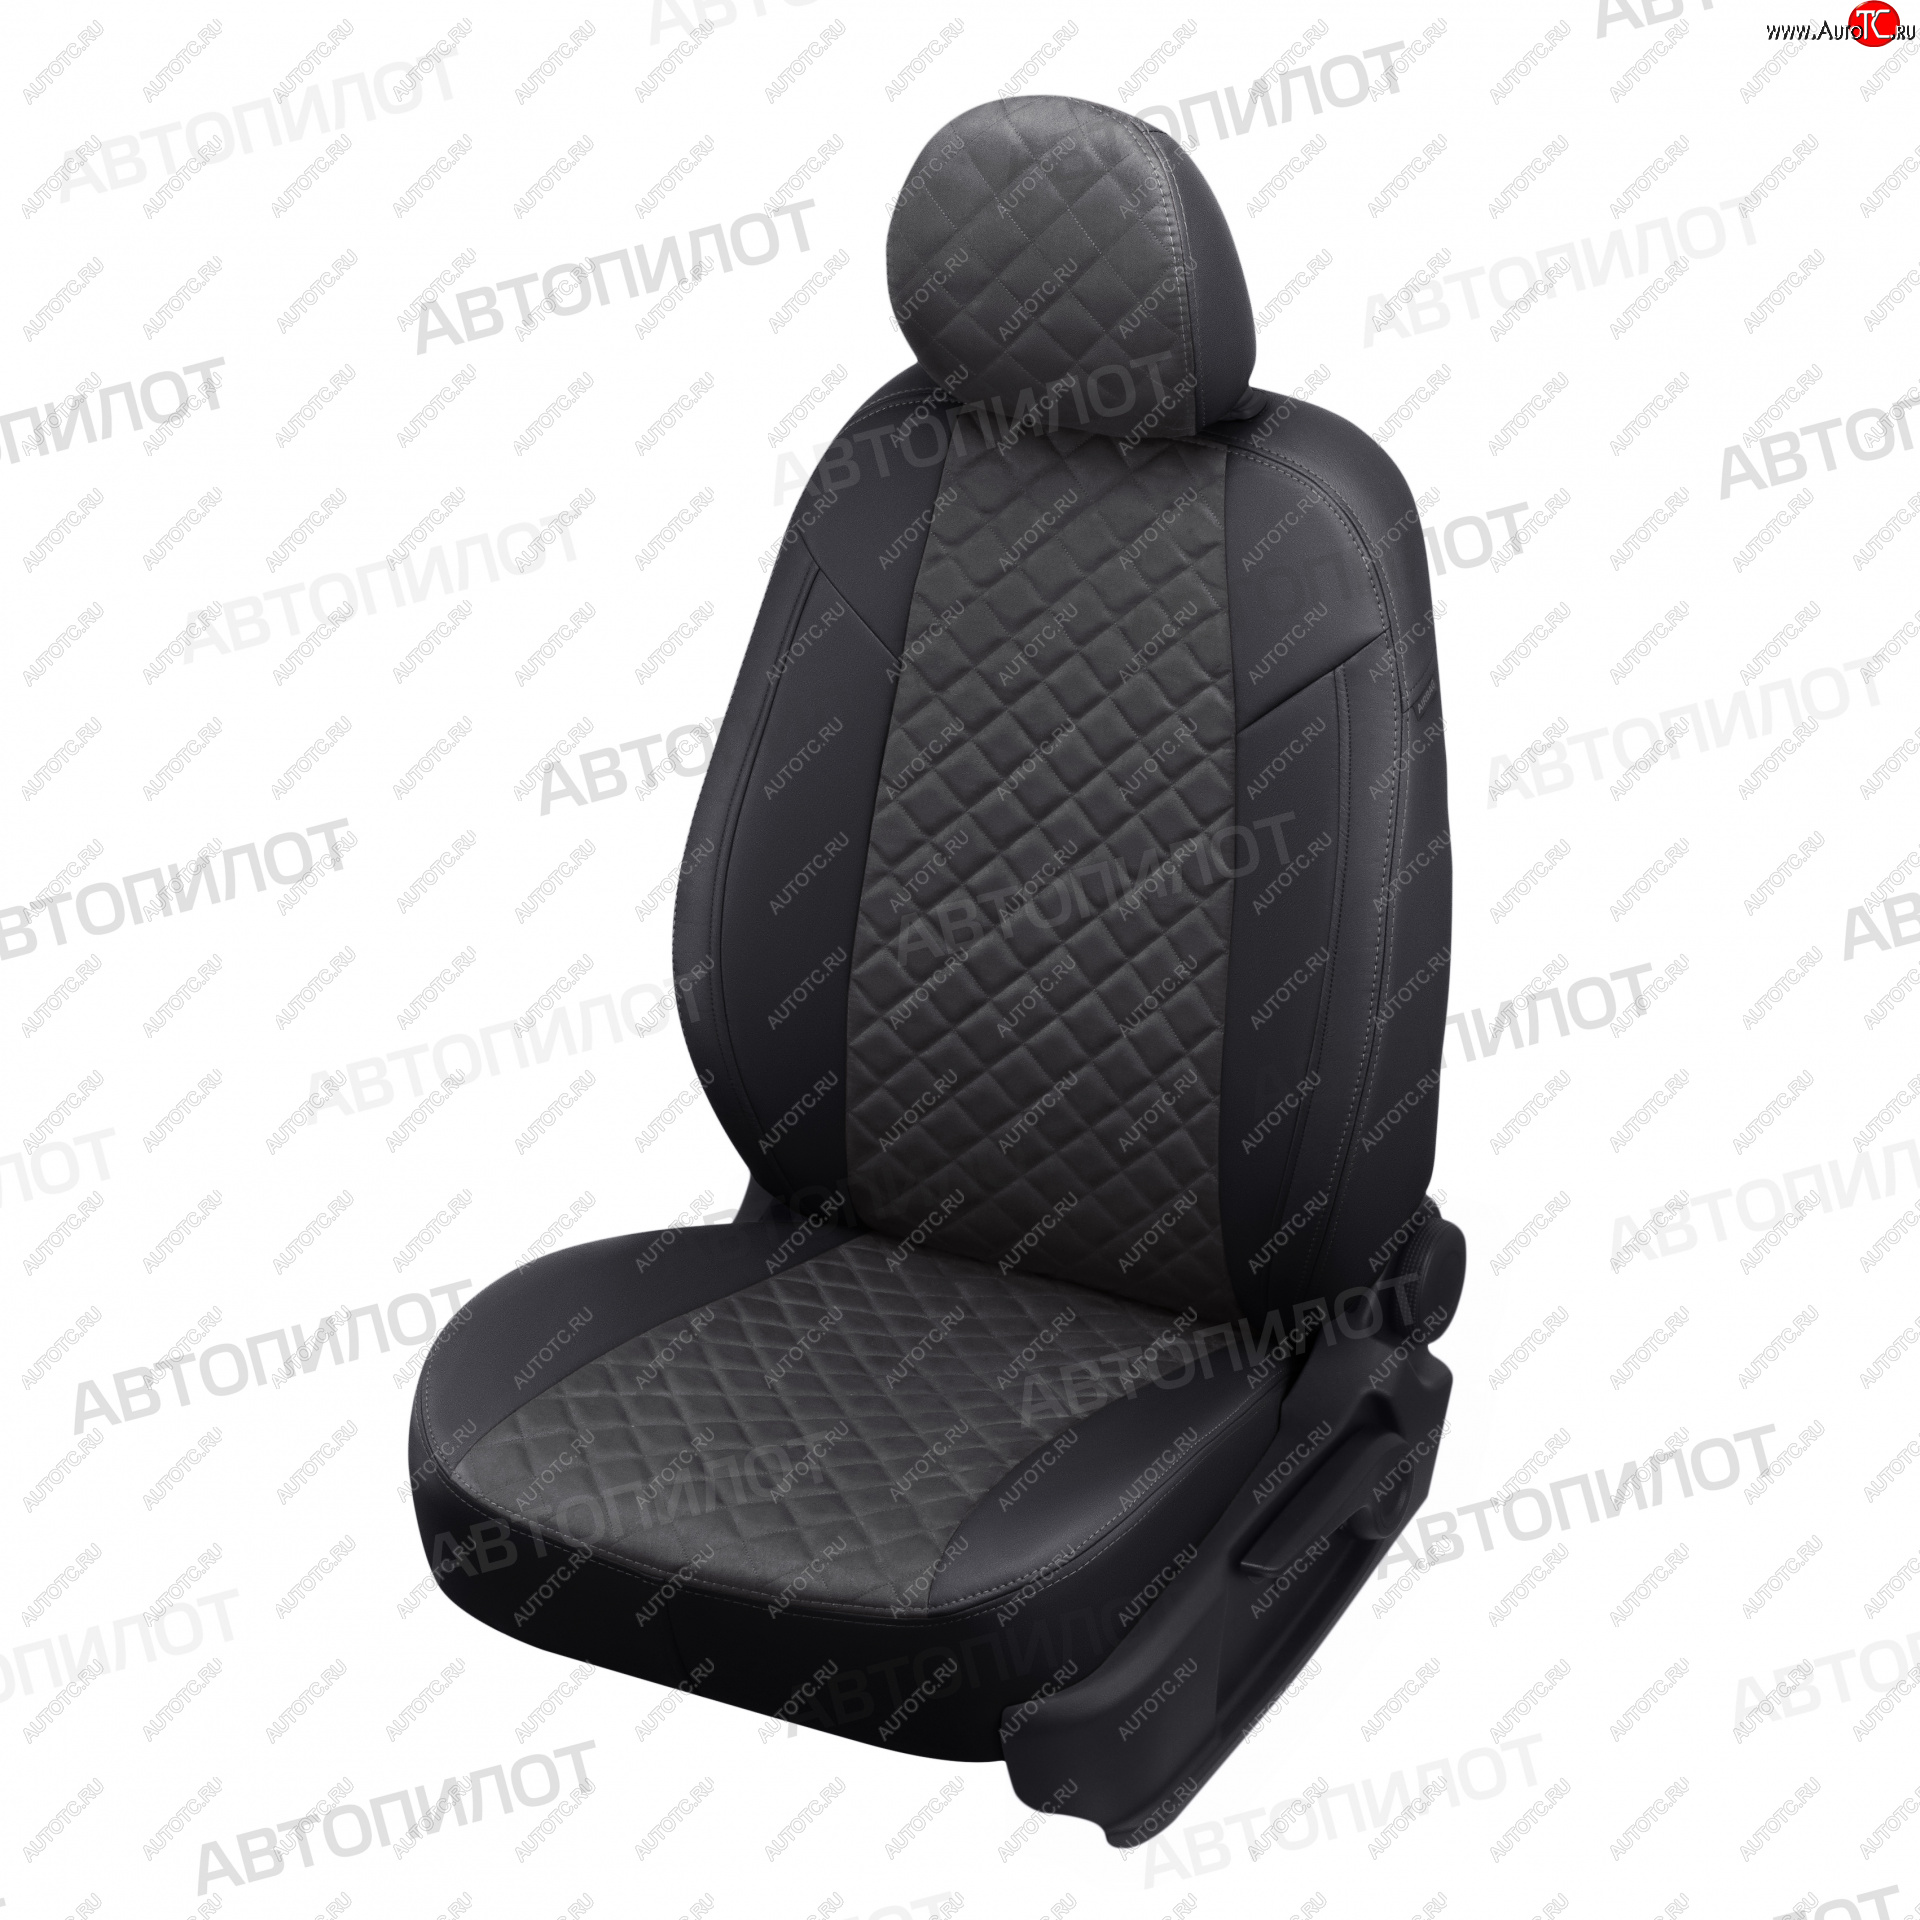 7 799 р. Чехлы сидений (экокожа) Автопилот Ромб  KIA Rio  2 JB (2005-2011) (черный/темно-серый)